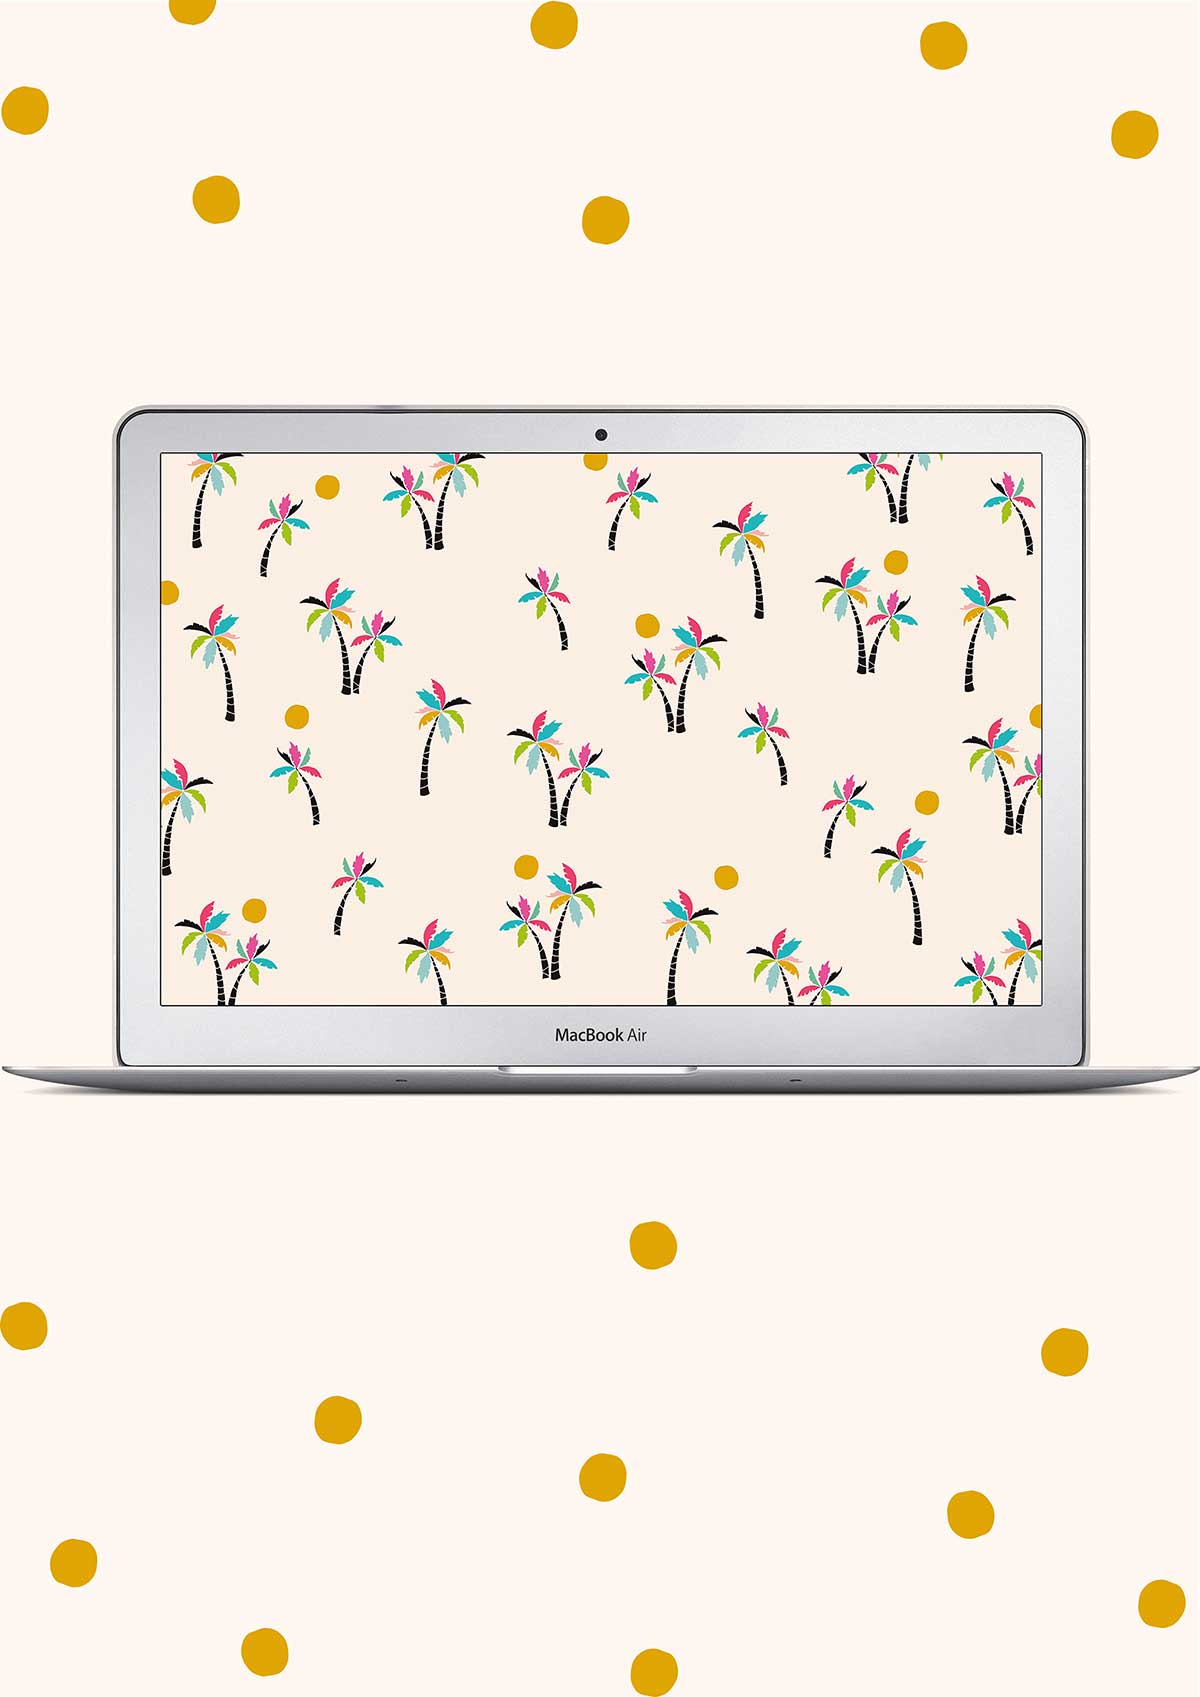 Palm tree desktop and iPad wallpaper – Make and Tell